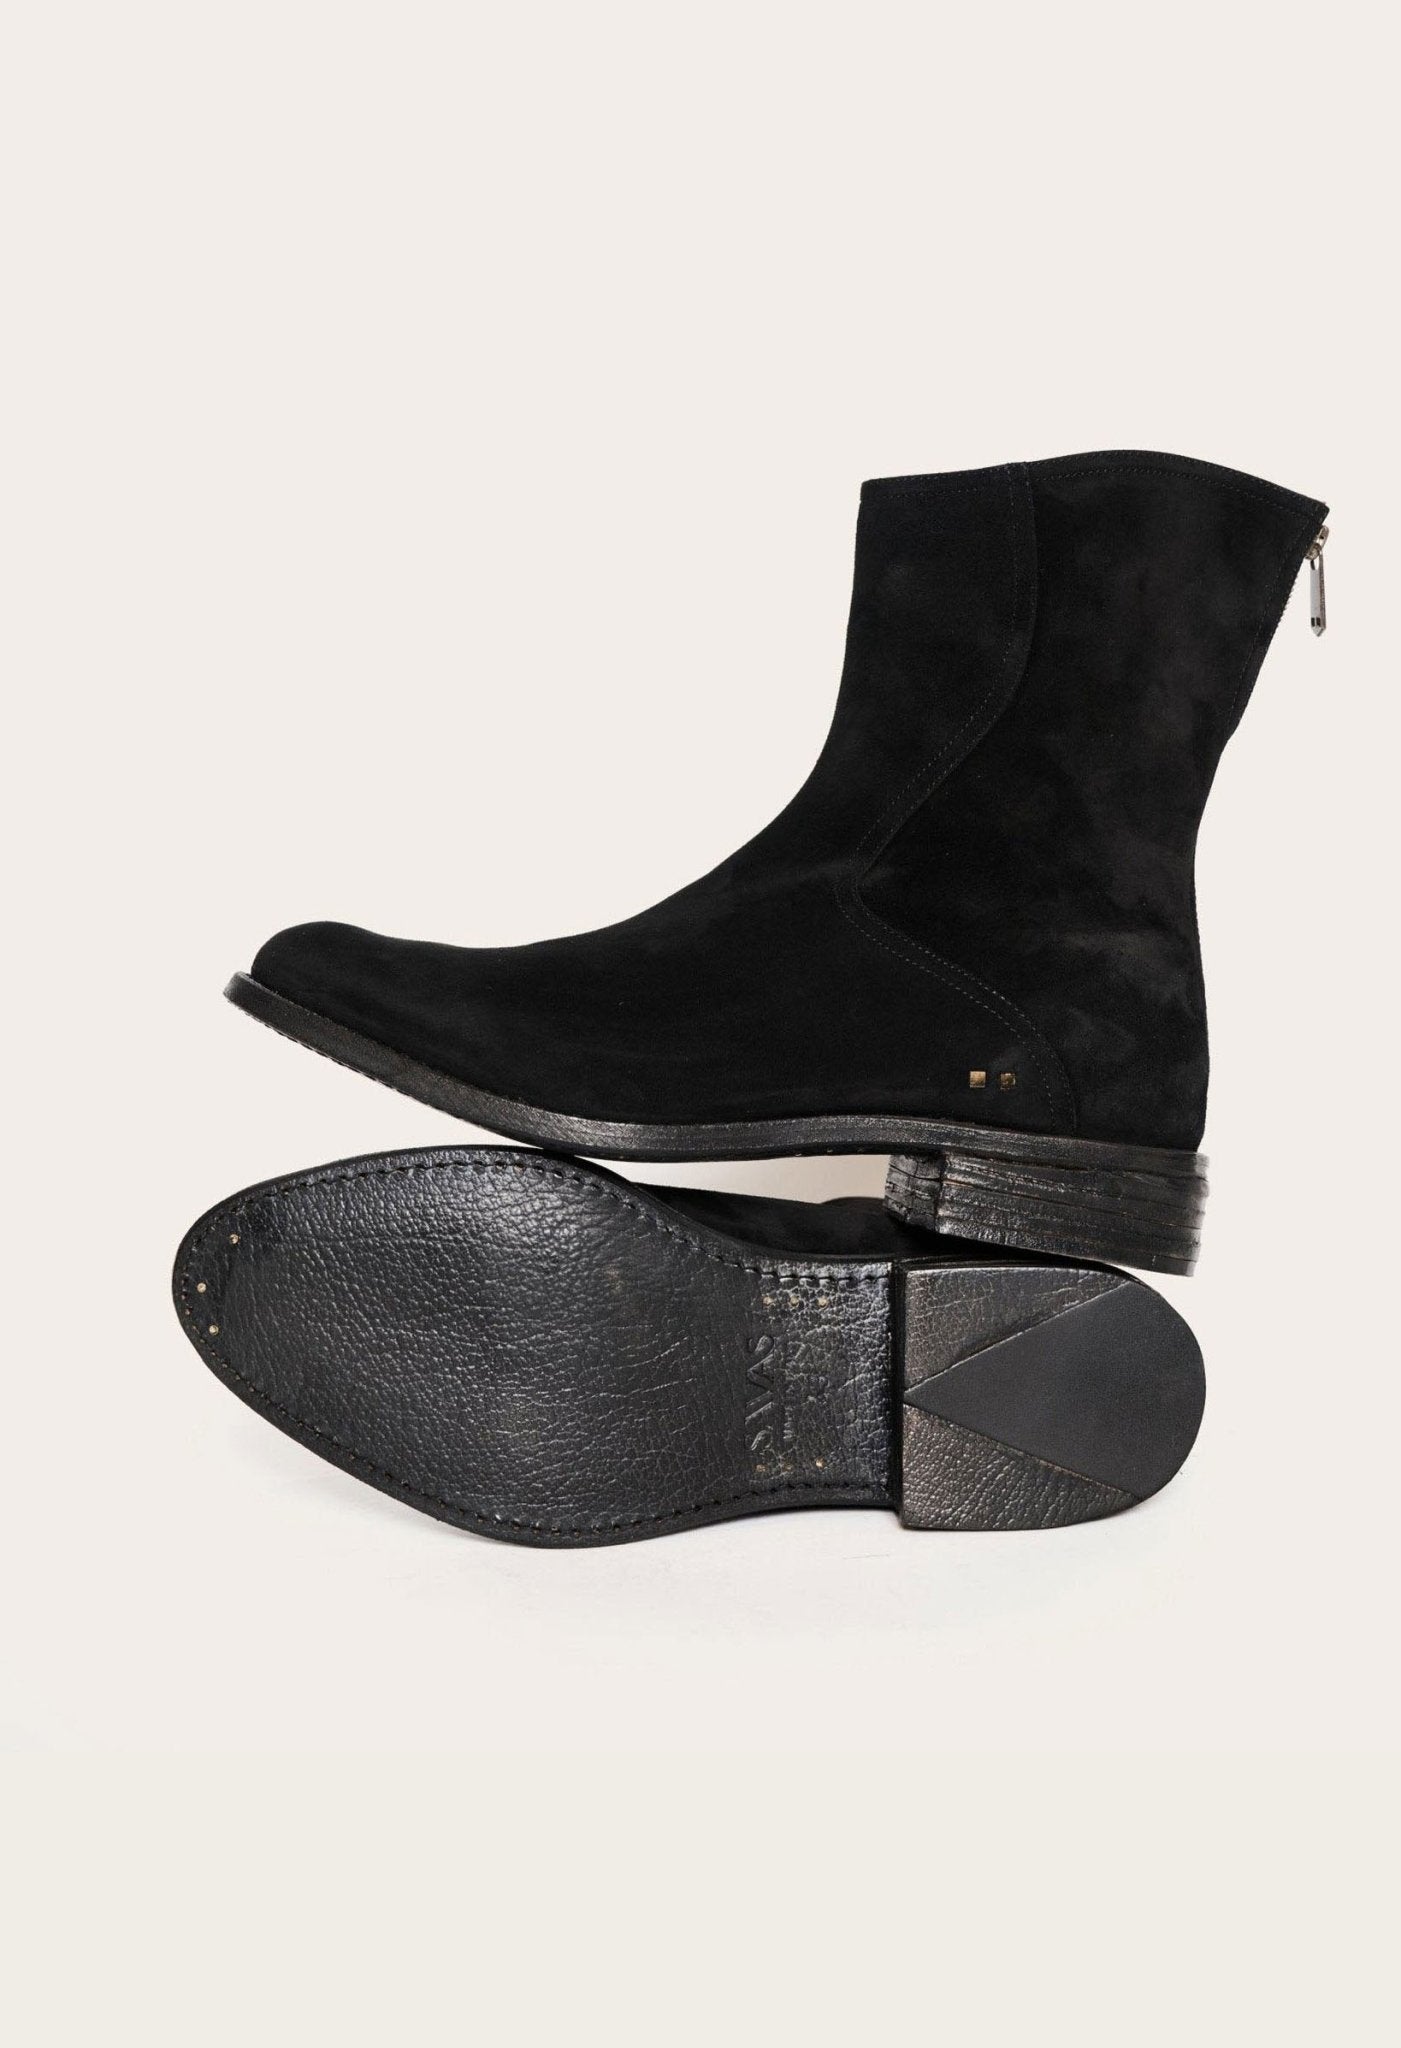 SavasFootwearThe Legend Boot: Black Suede